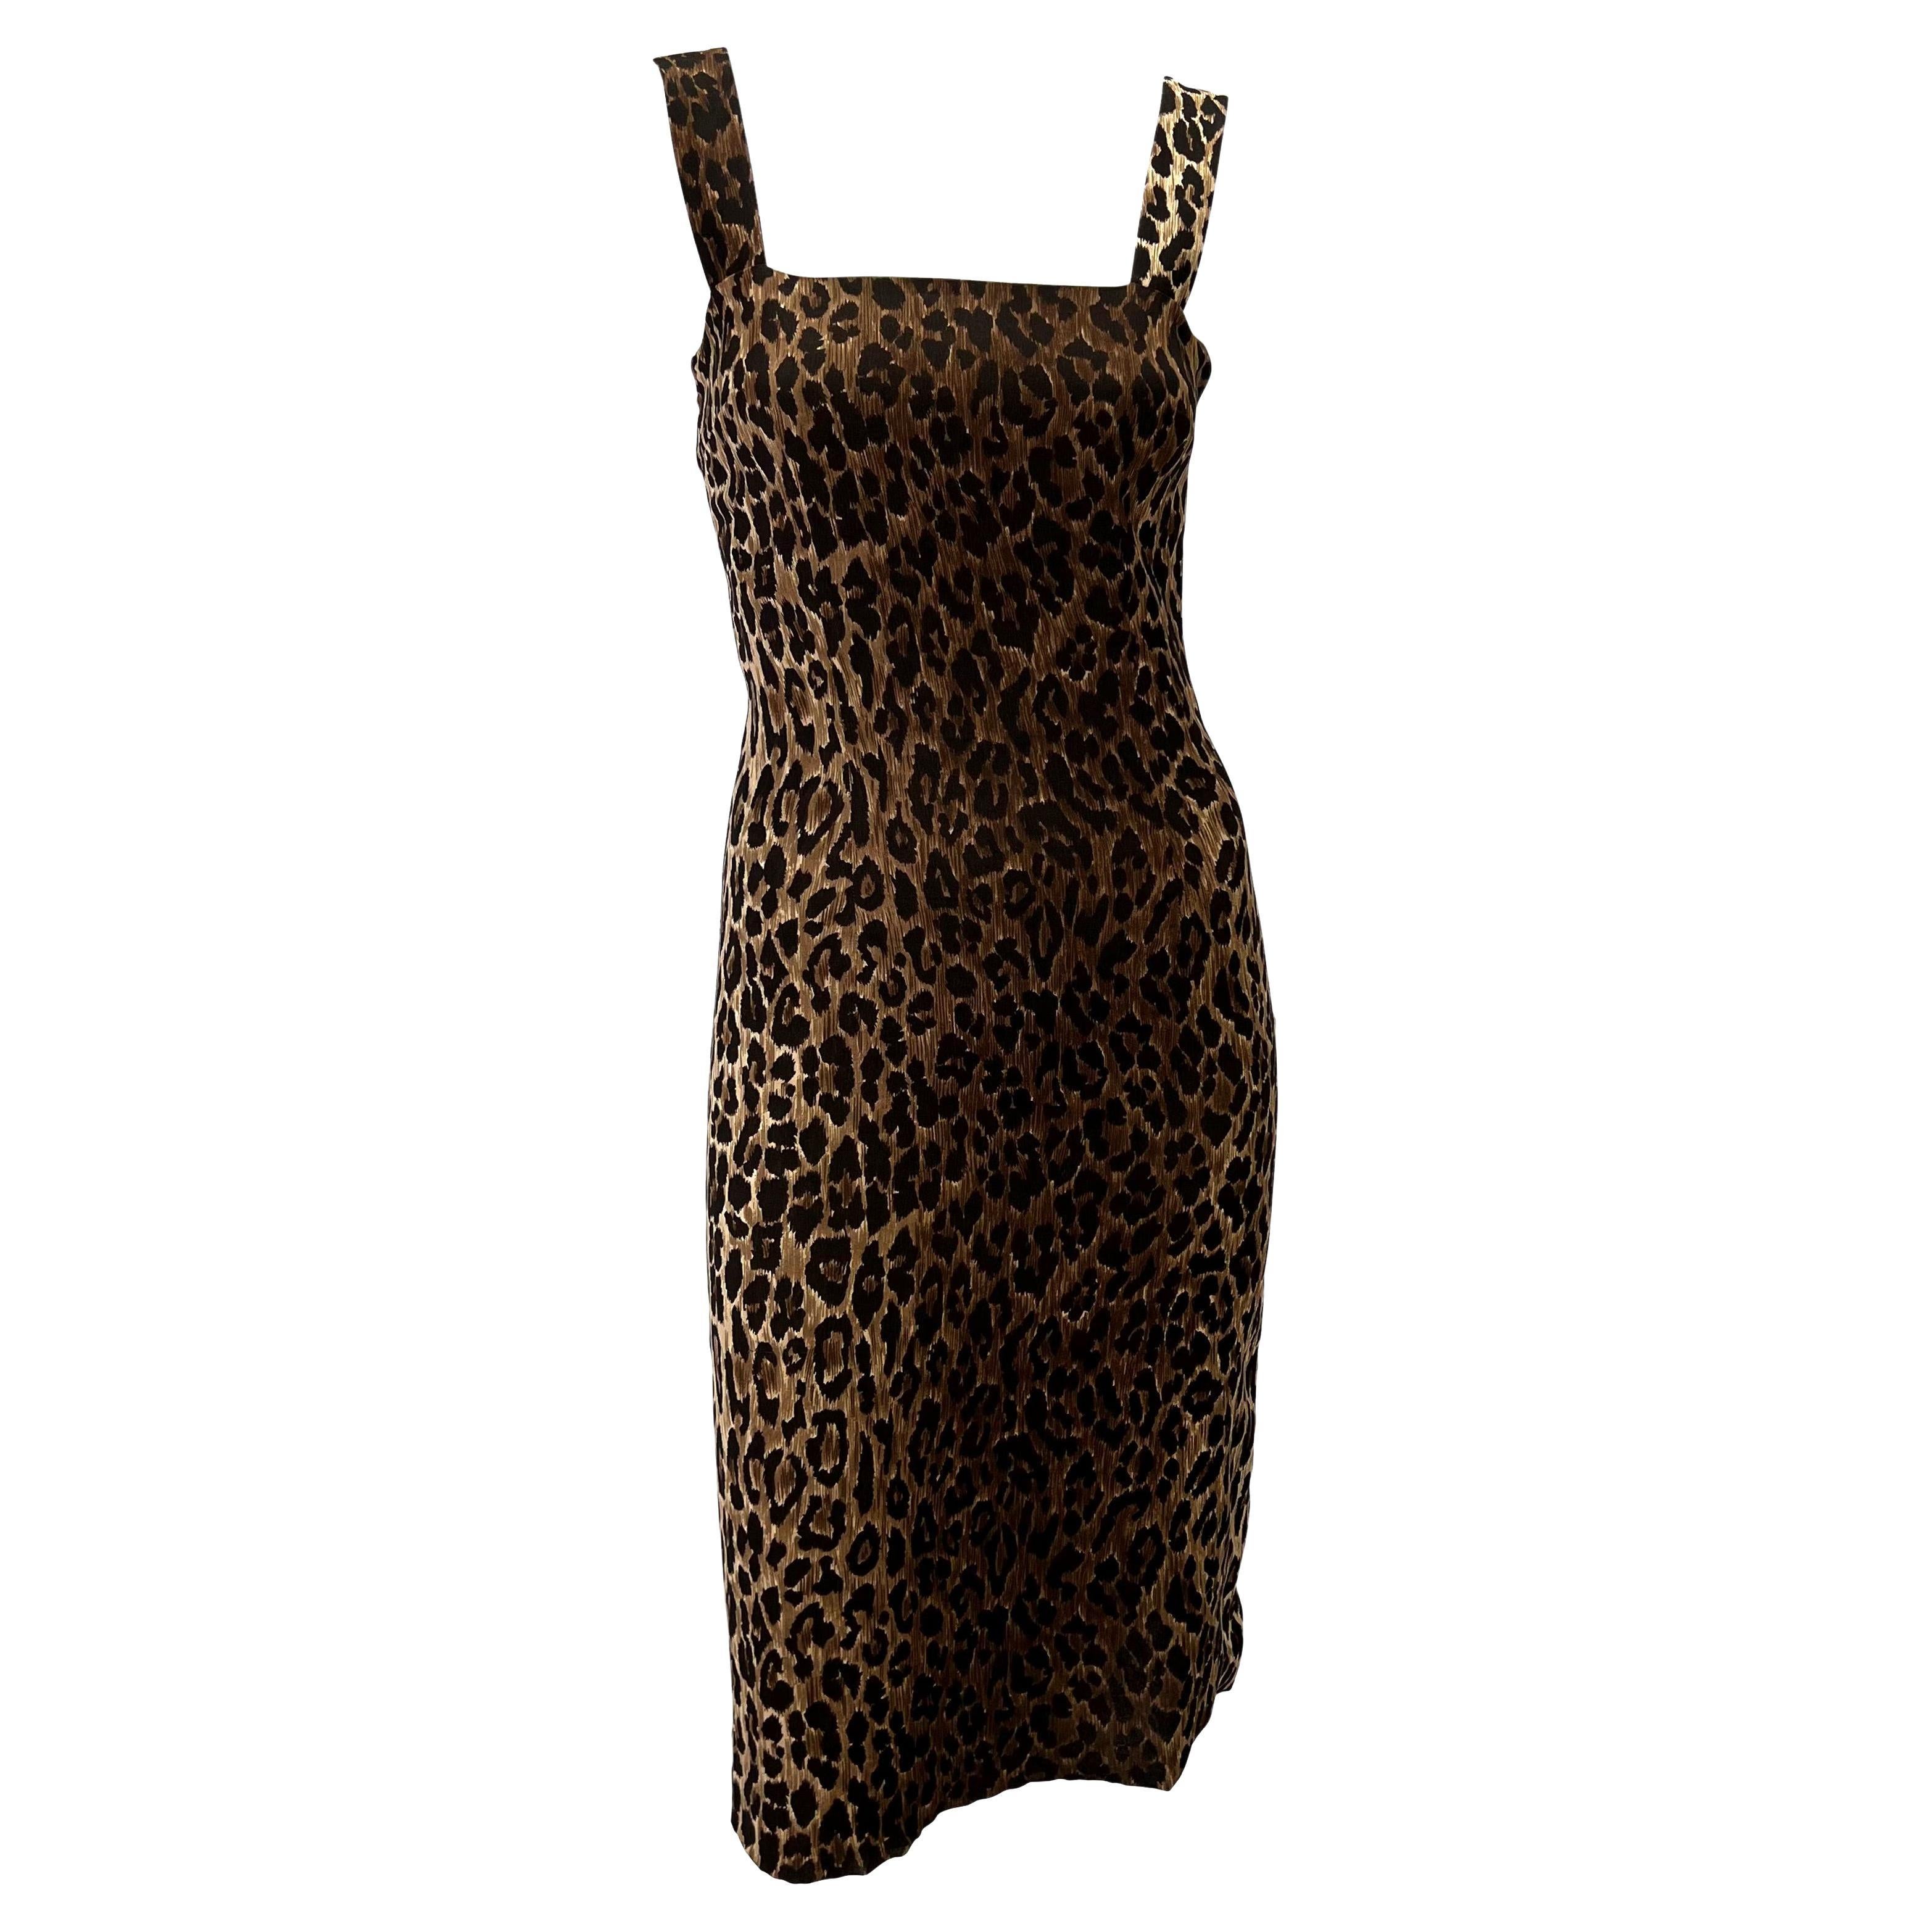 S/S 1997 Dolce & Gabbana Cheetah Print Silk Sleeveless Bodycon Pin-Up Dress For Sale